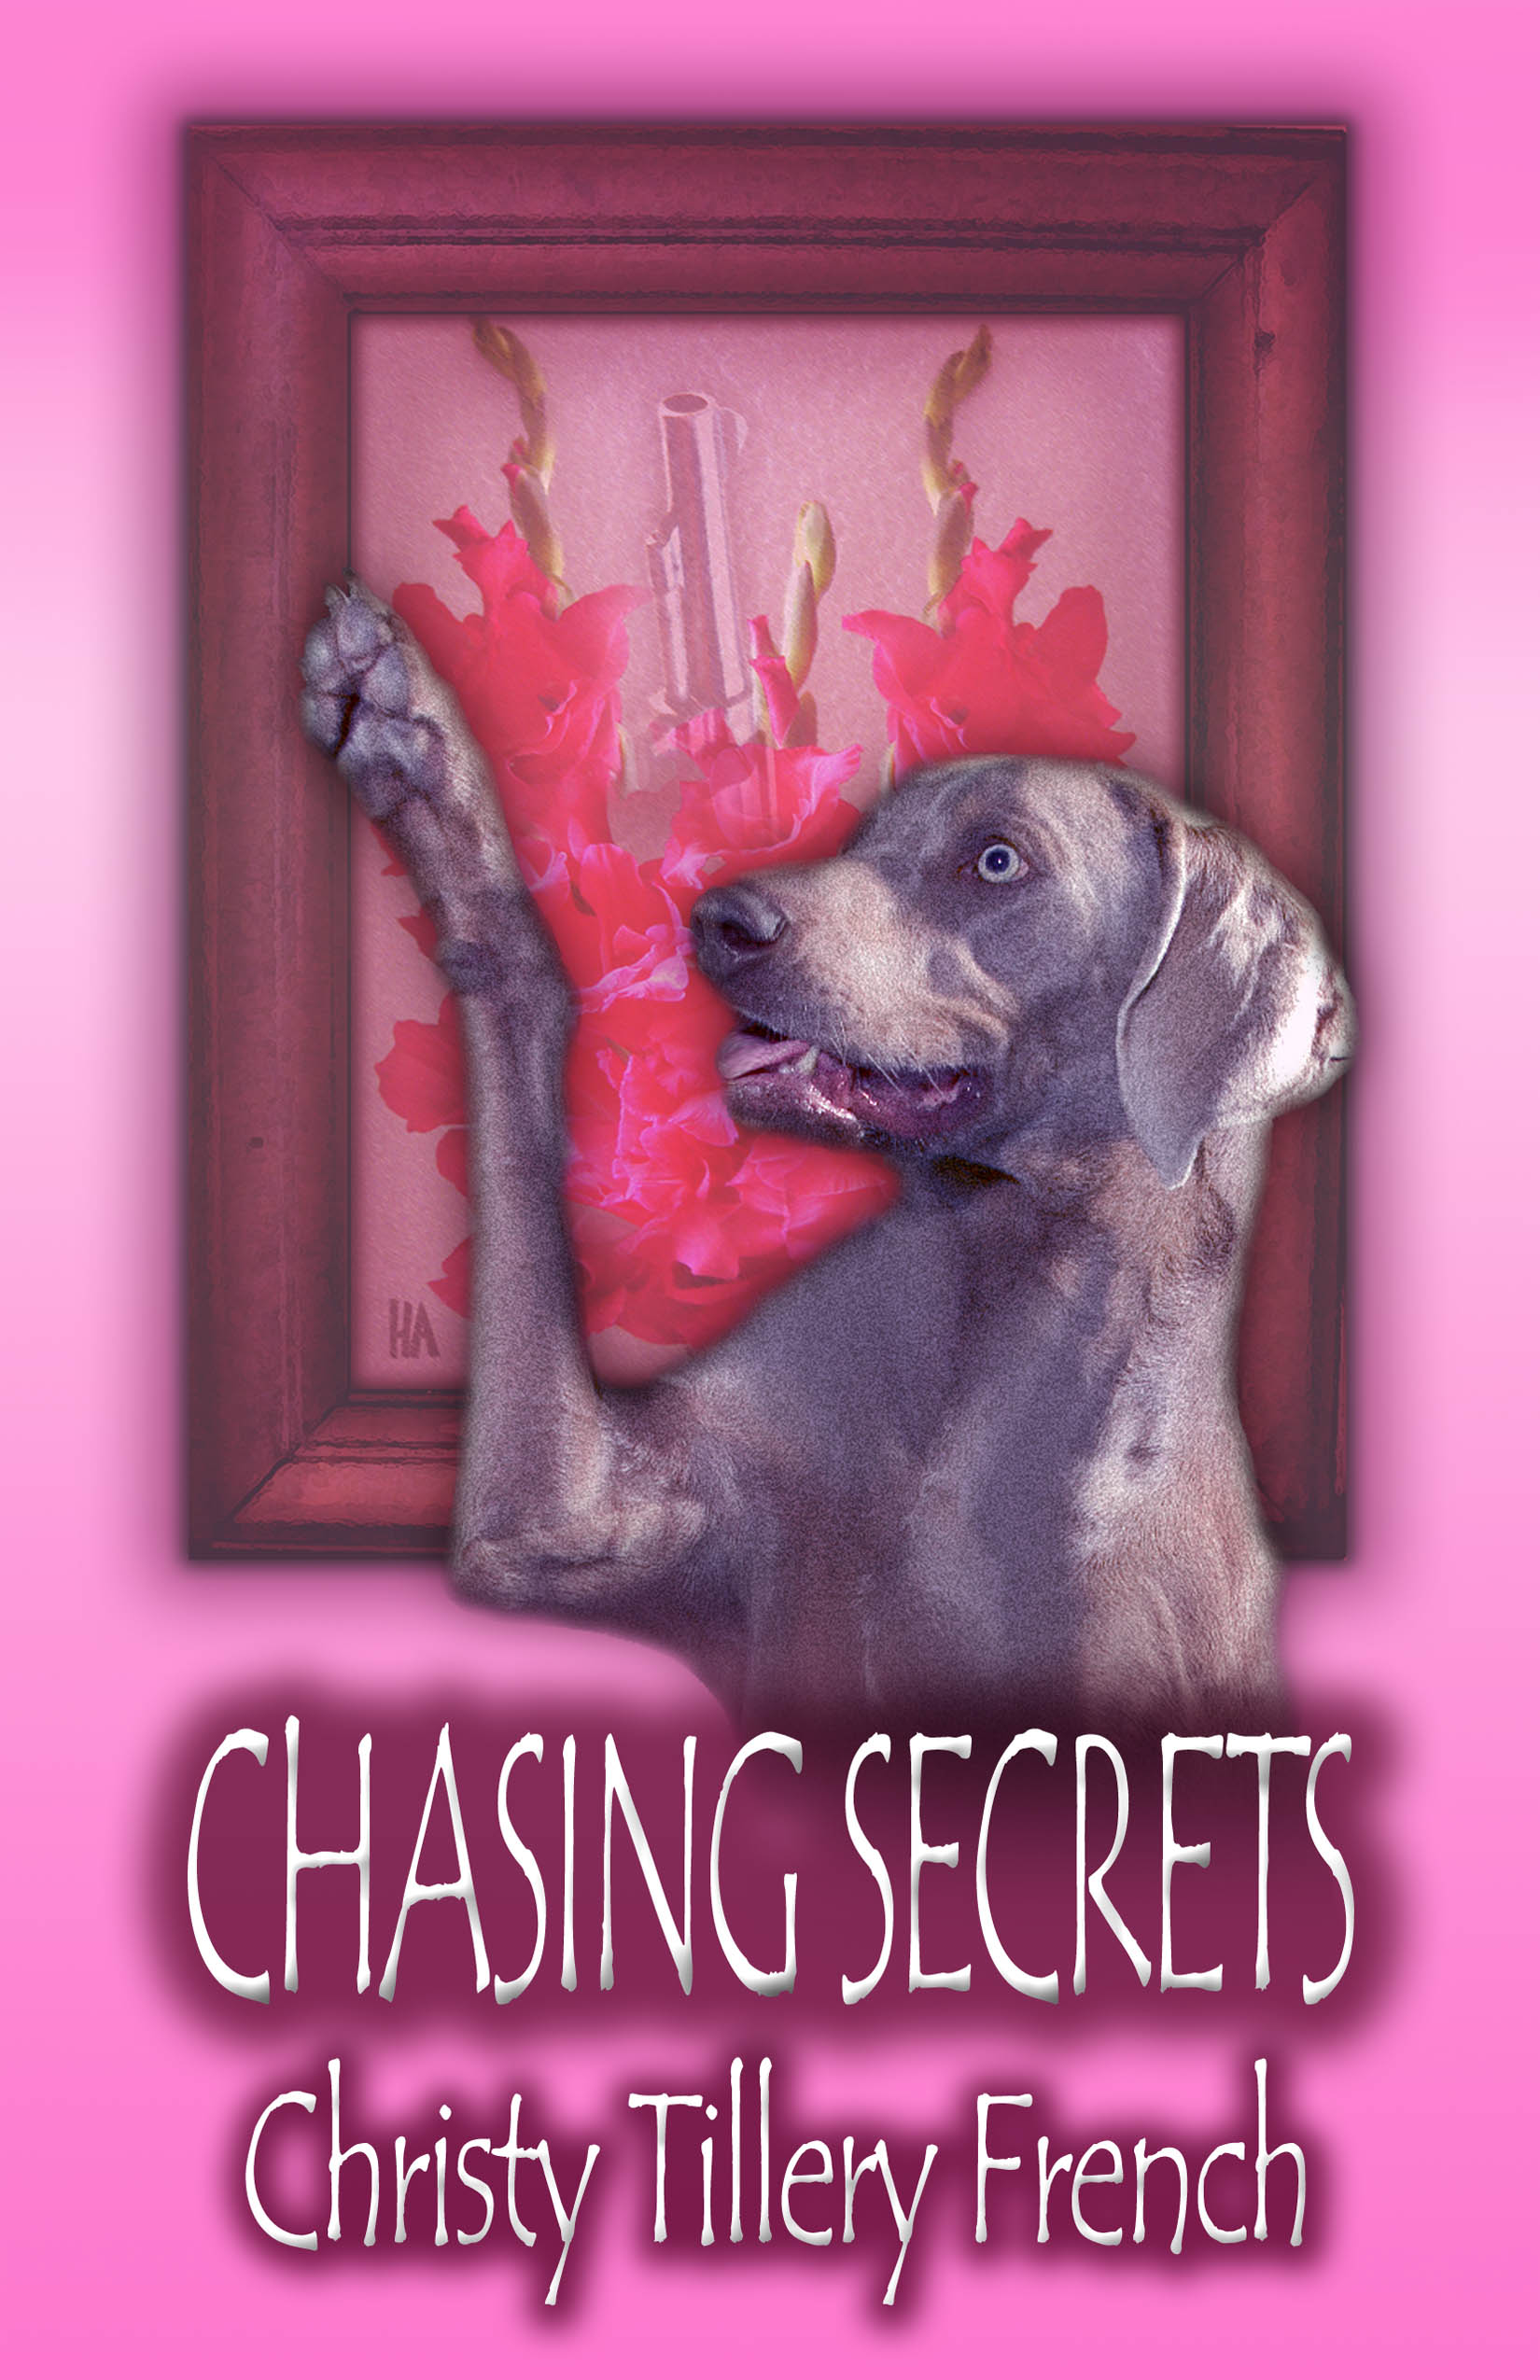 Chasing Secrets by Christy Tillery French